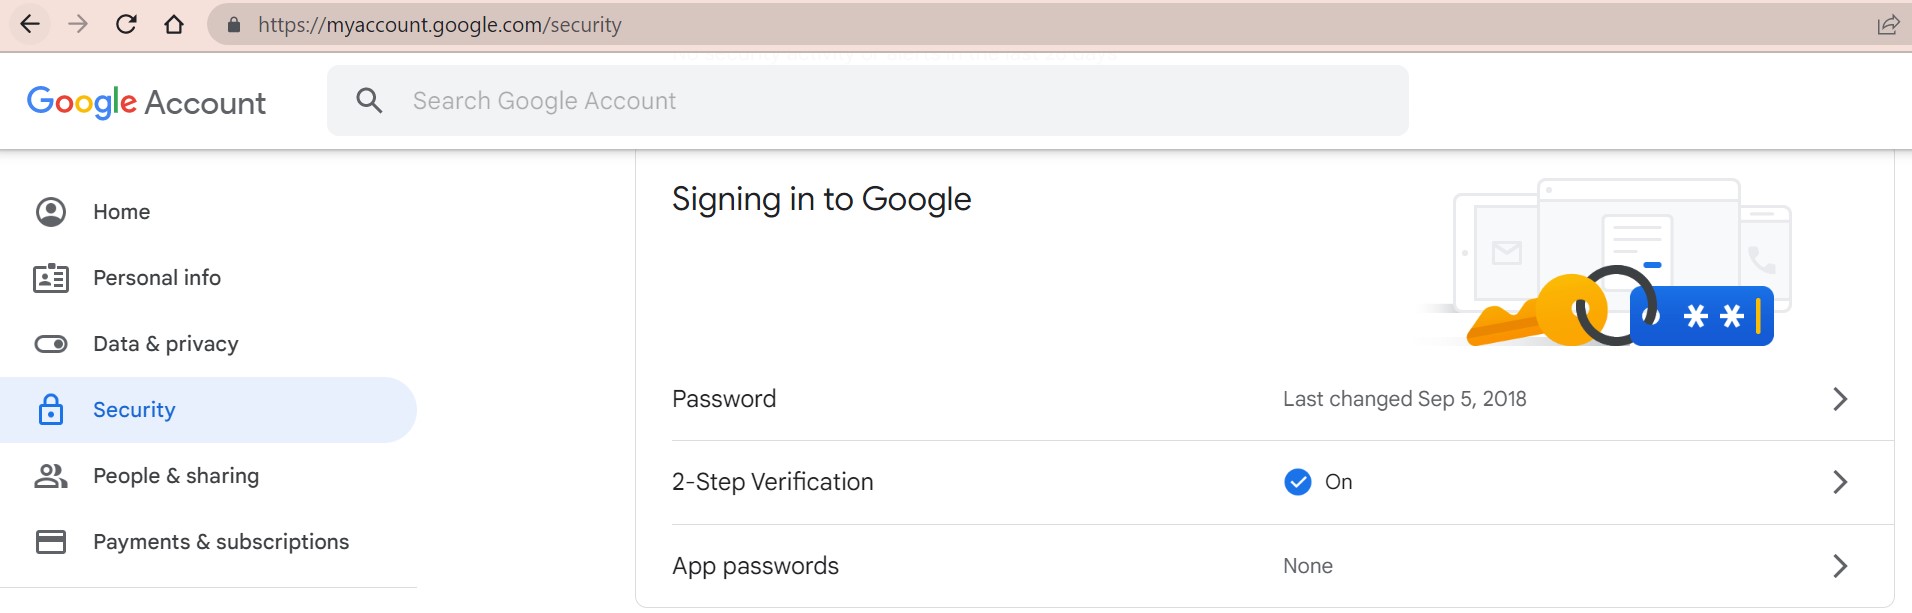 google security settings